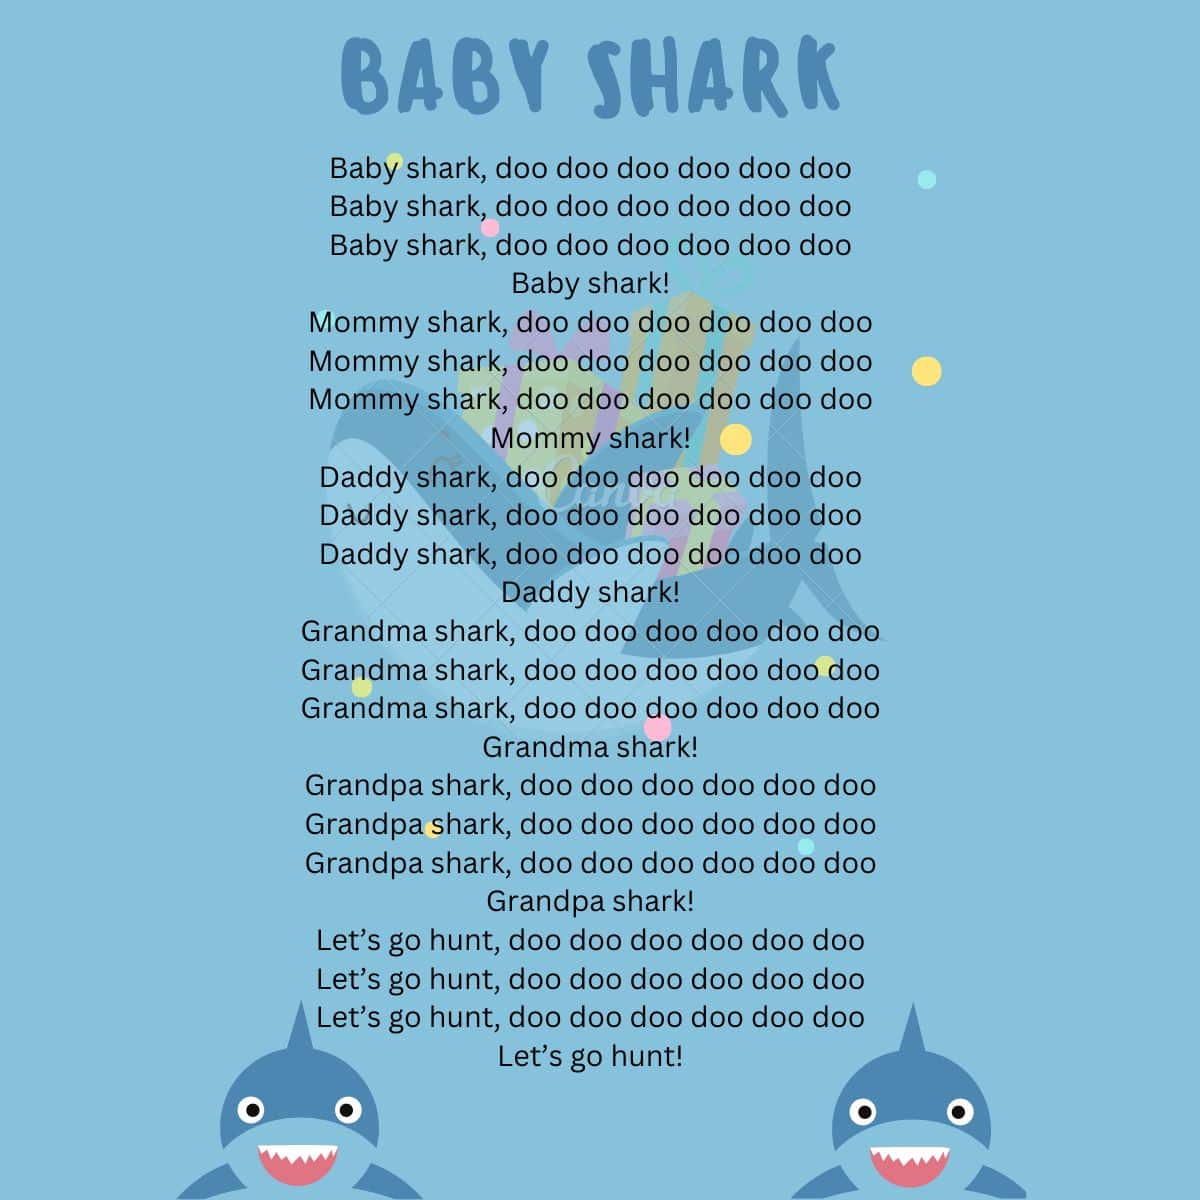 Baby Shark Lyrics on a Blue Background